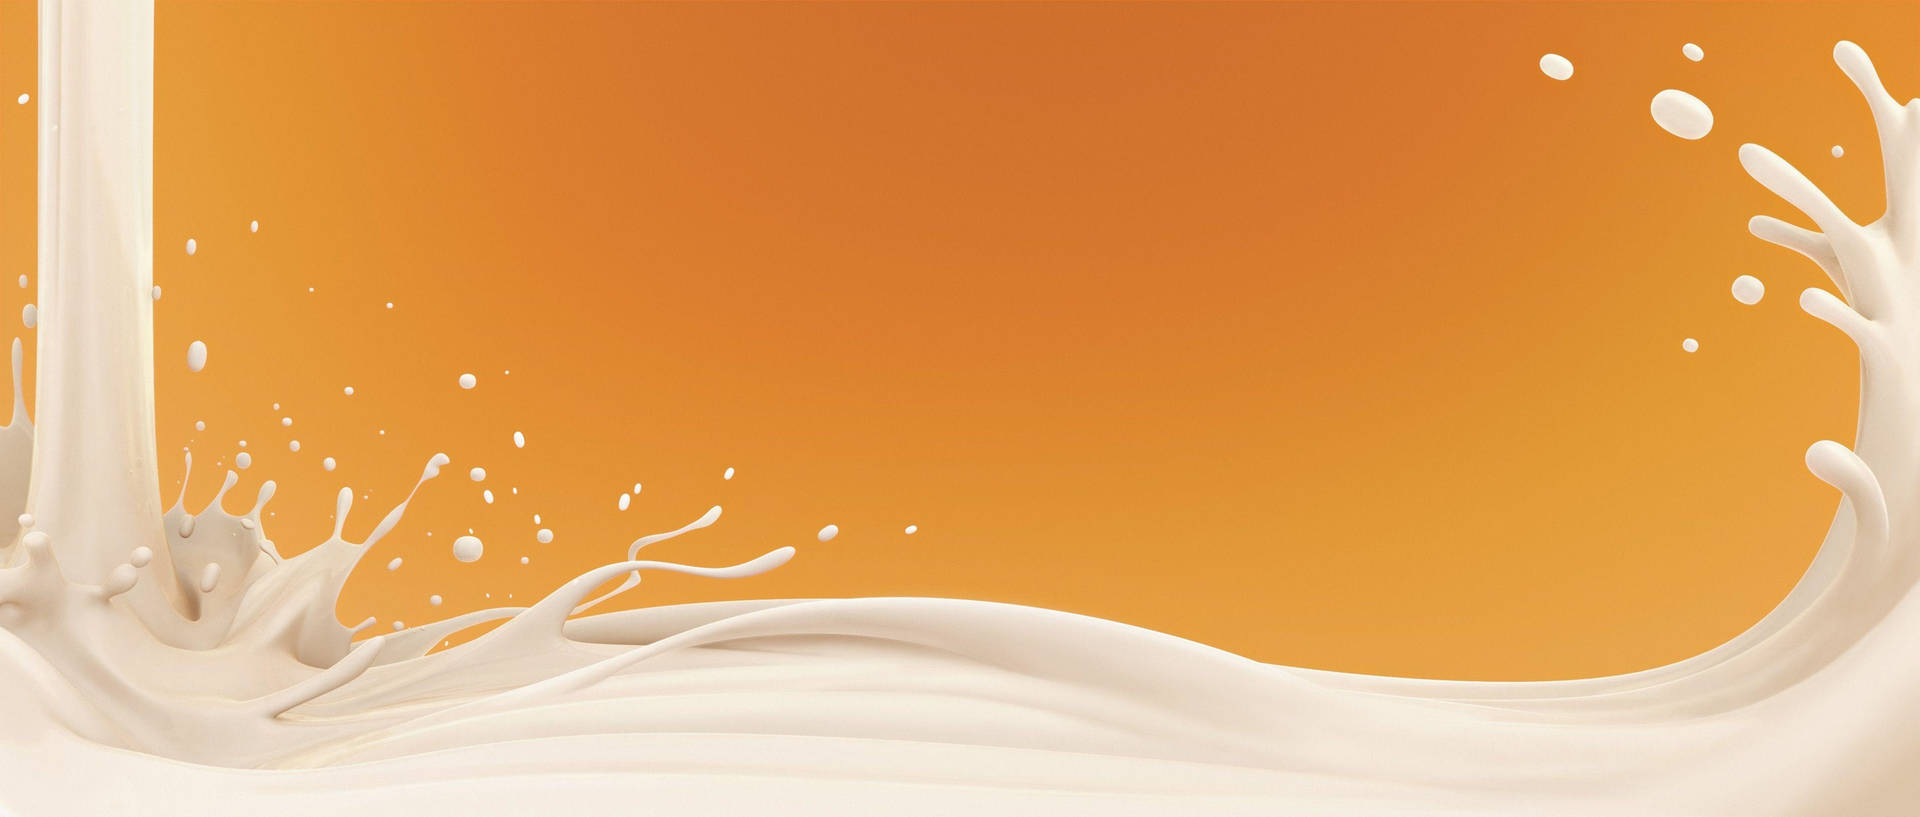 Splashing Milk Liquid Branding Design